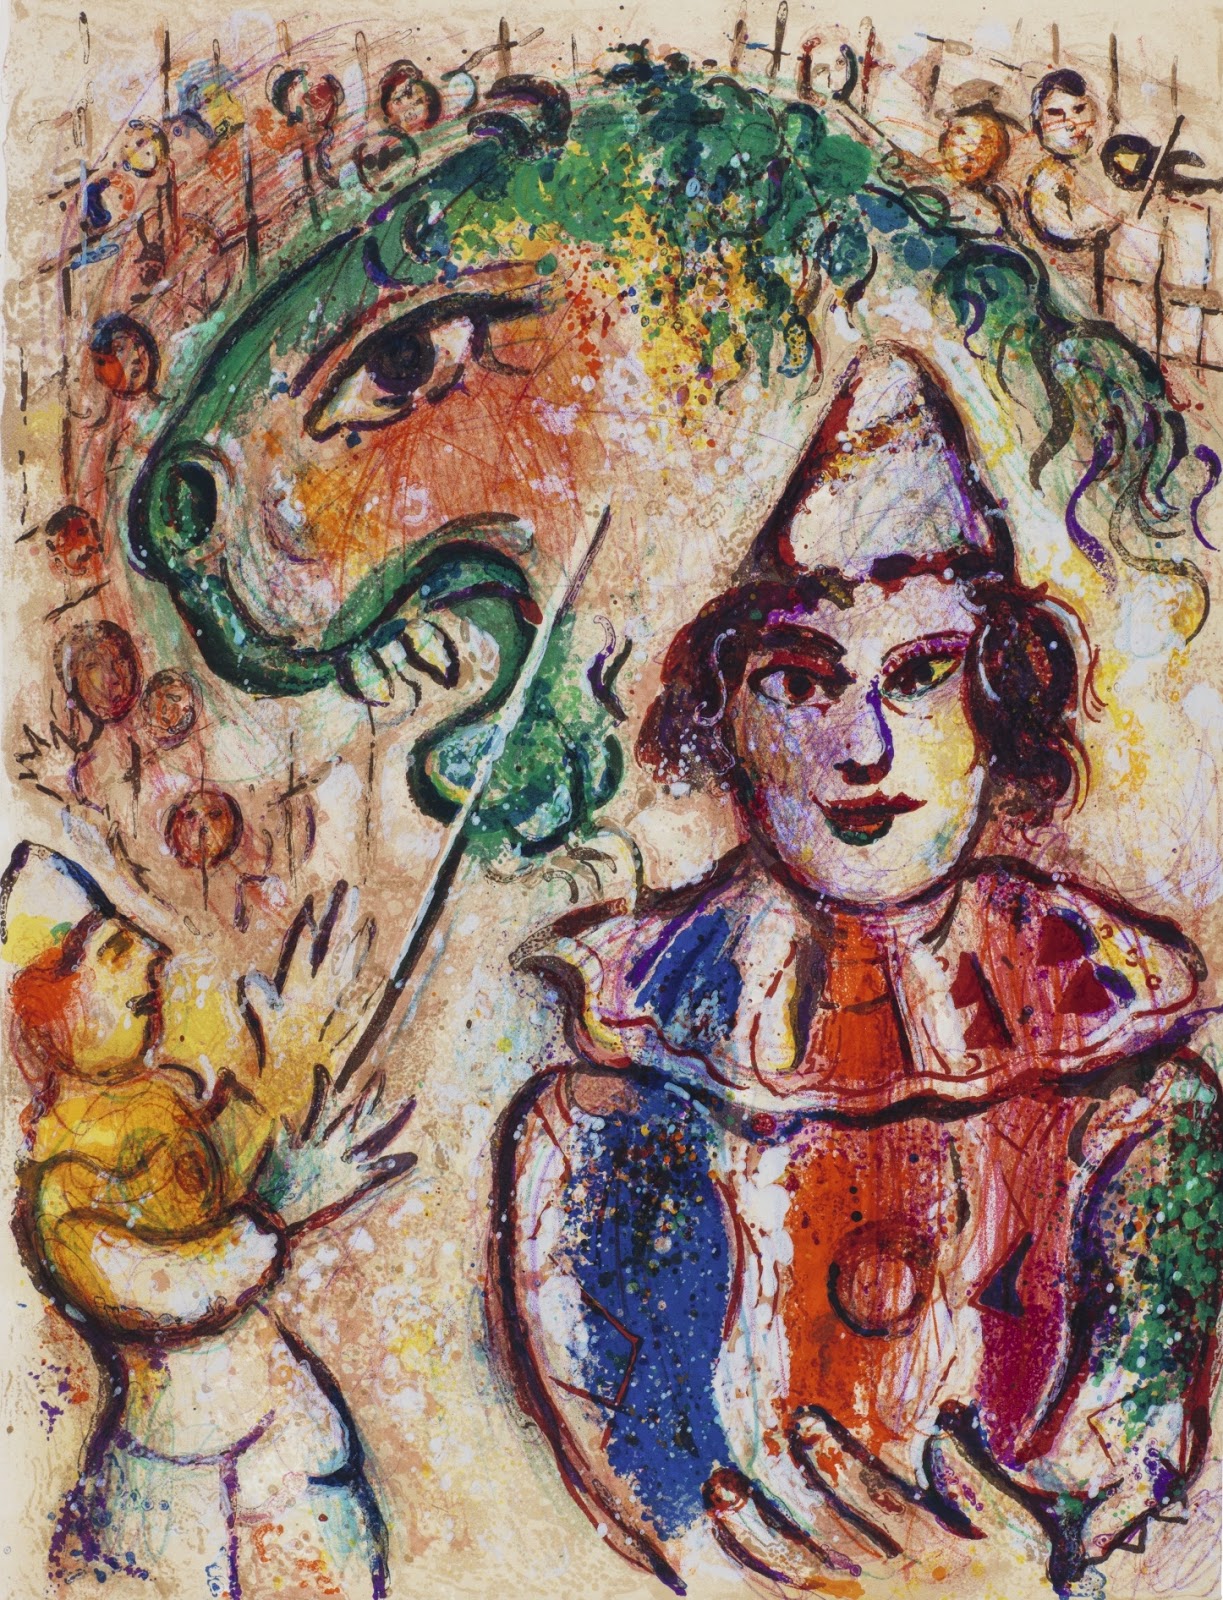 Marc+Chagall-1887-1985 (43).jpg